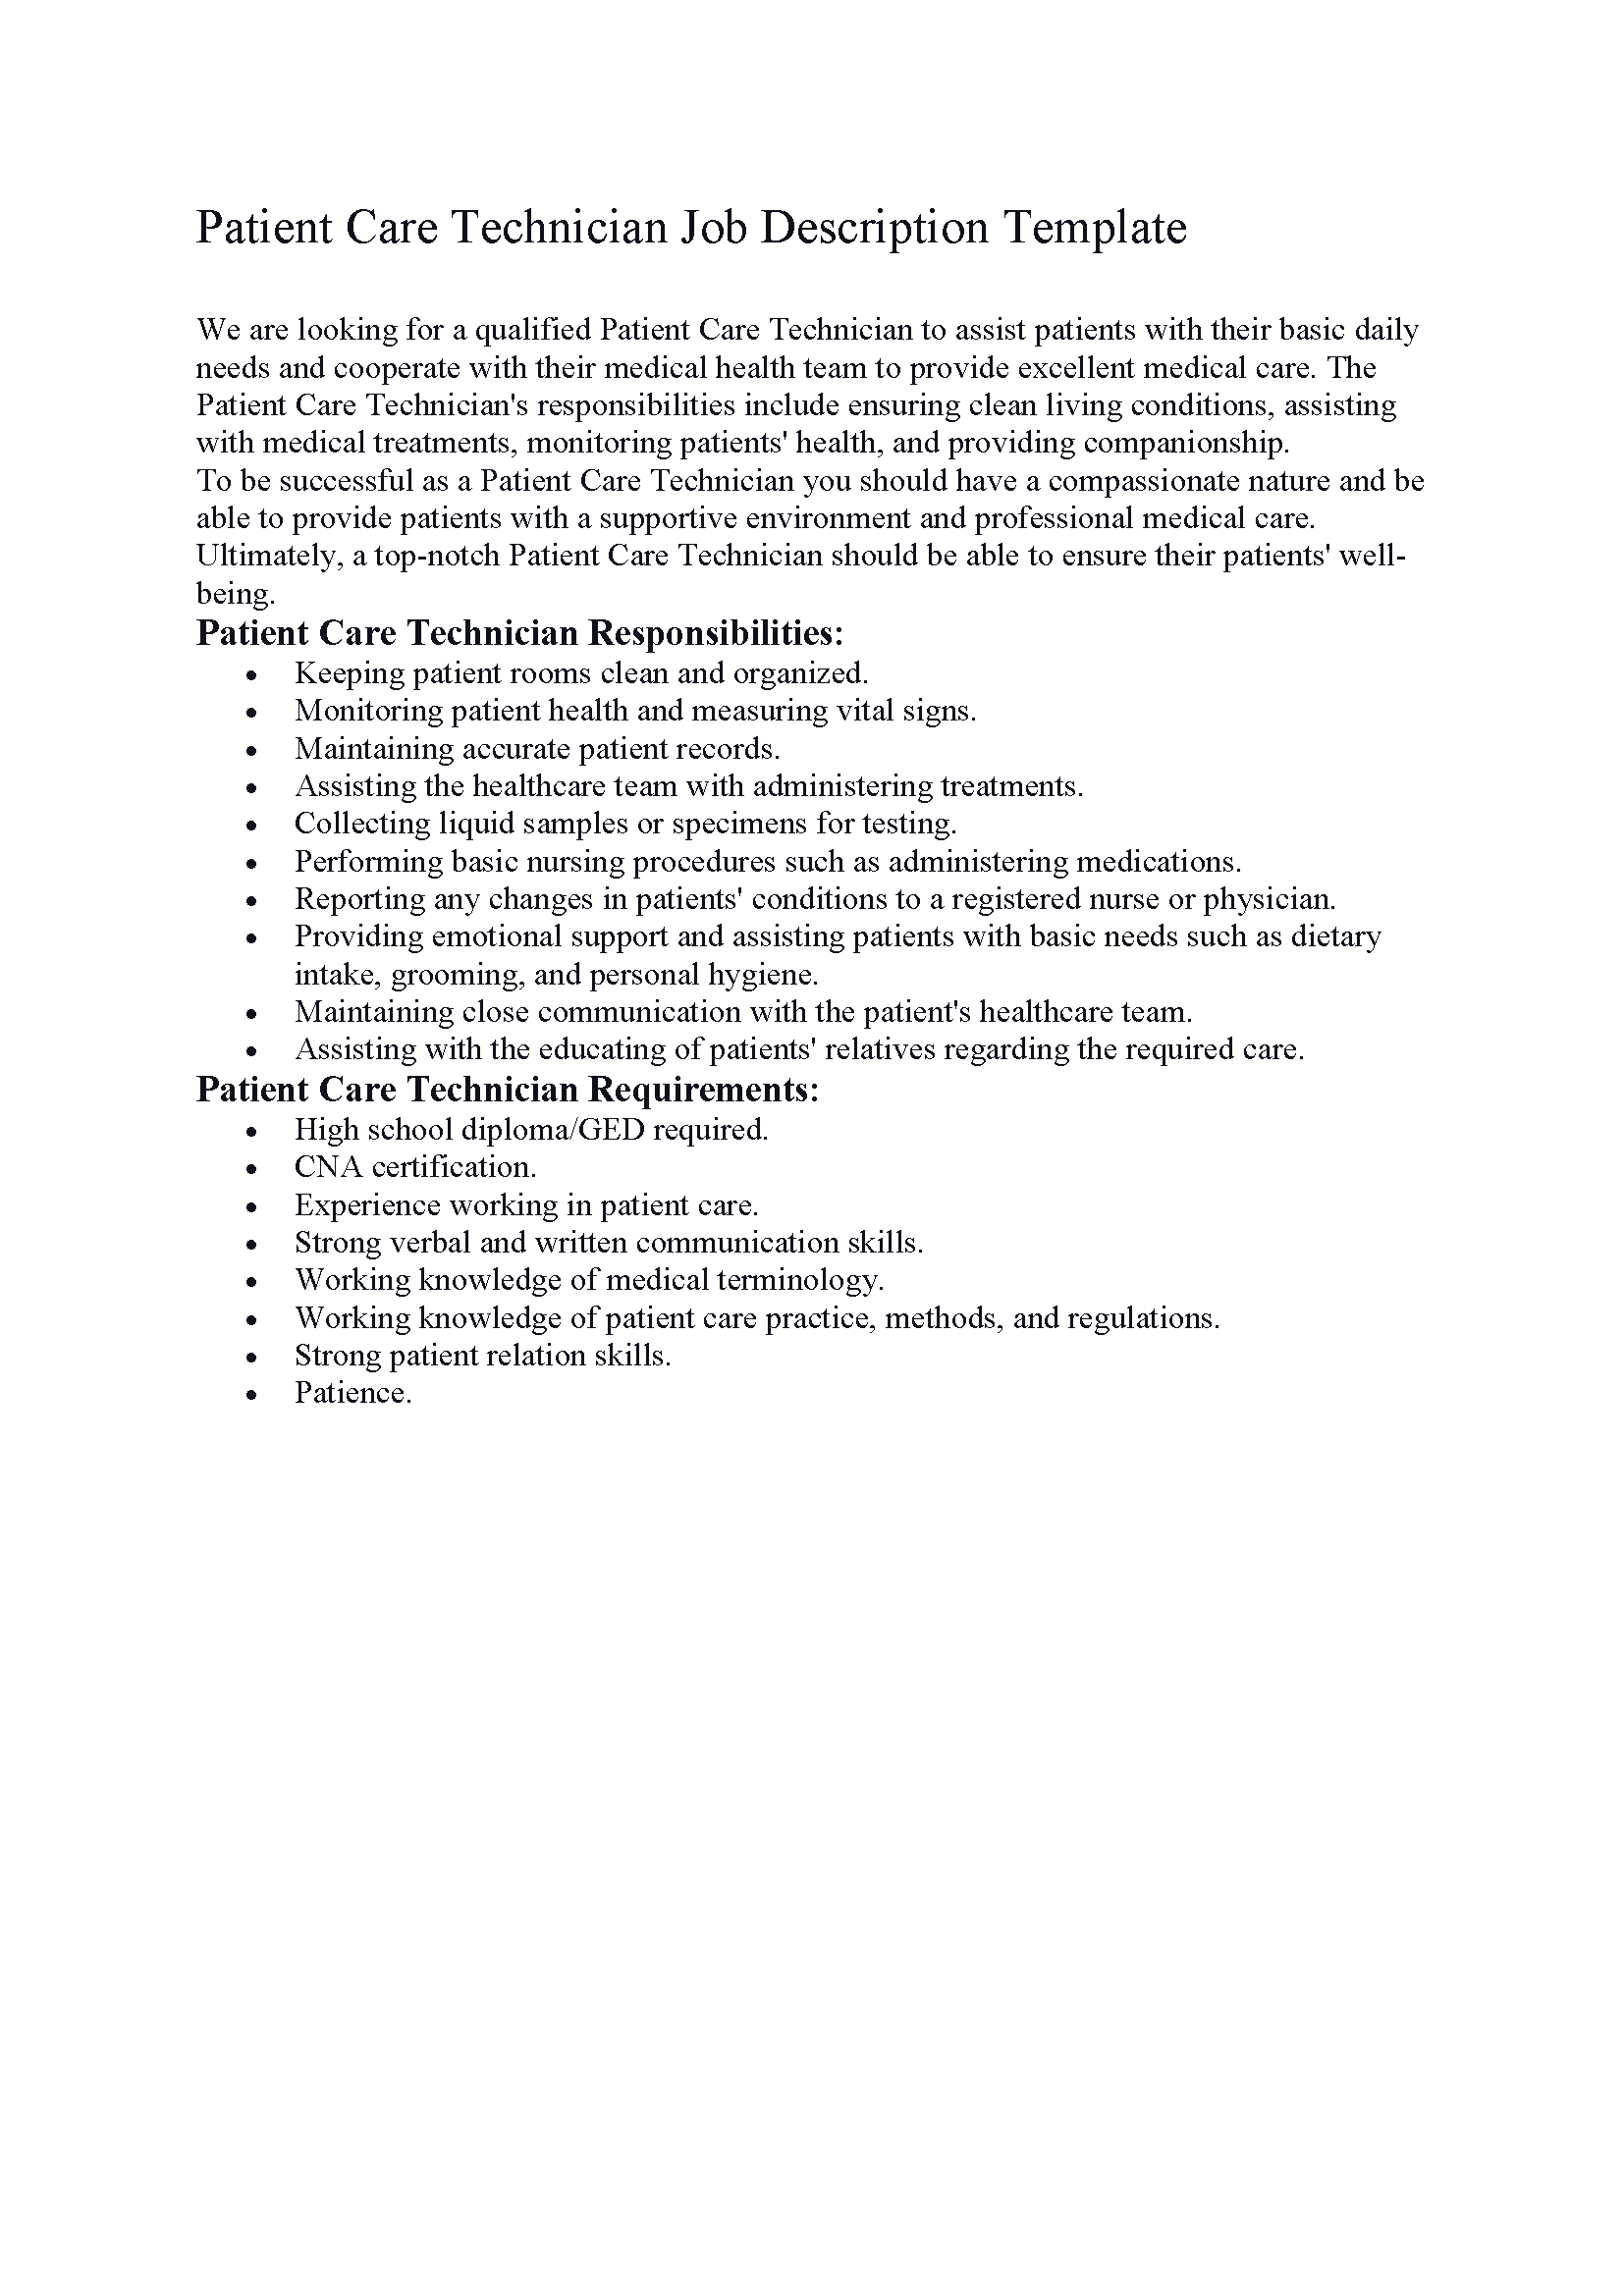 Patient Care Technician Job Description Template